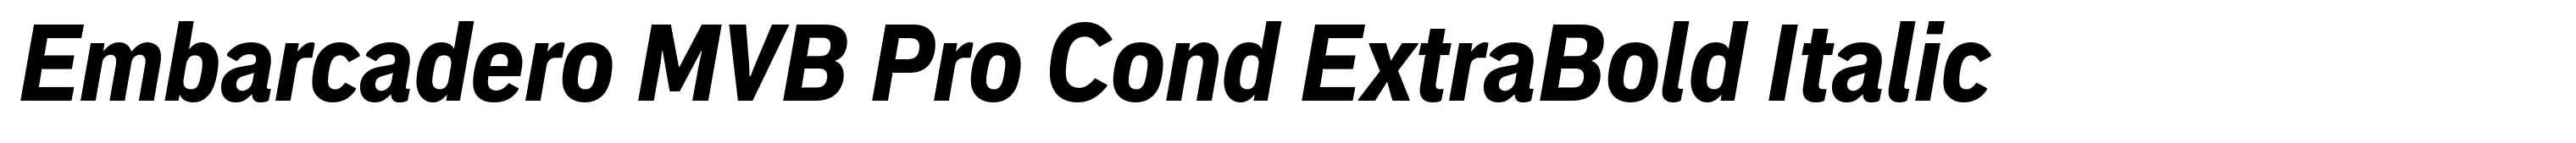 Embarcadero MVB Pro Cond ExtraBold Italic